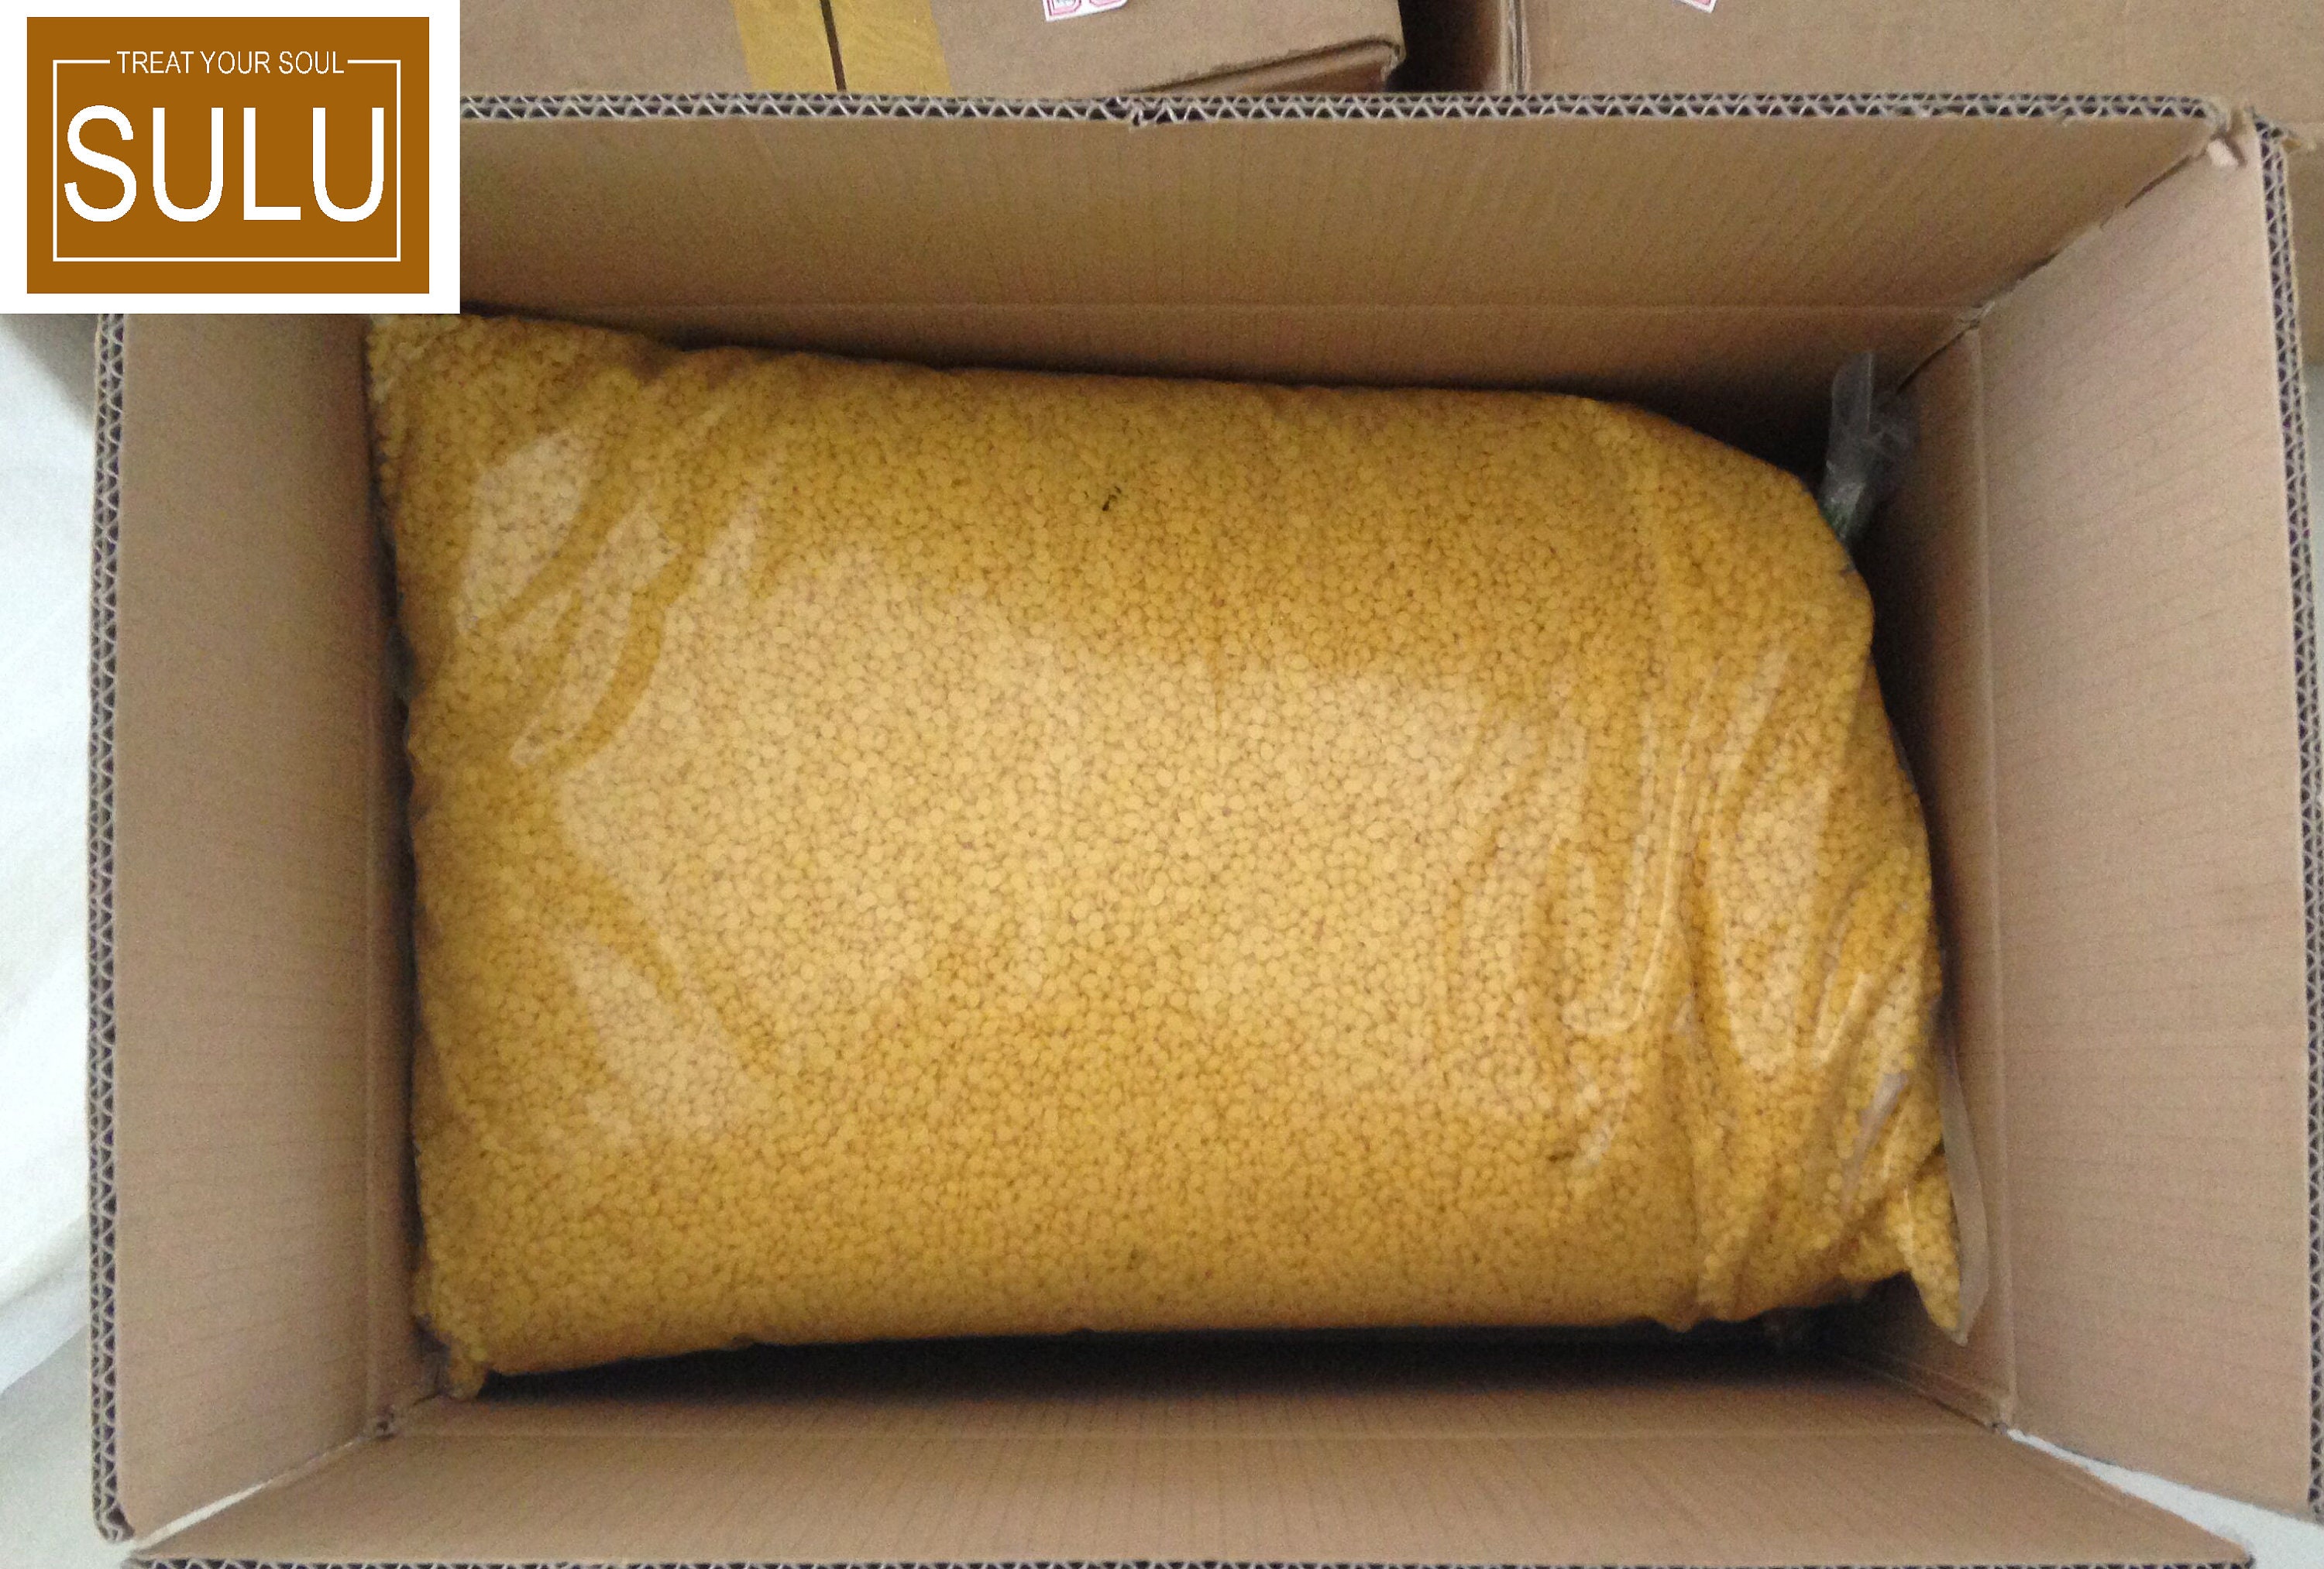 US Organic Beeswax Yellow Pastille, 100% Pure Certified USDA Organic, – US  Organic